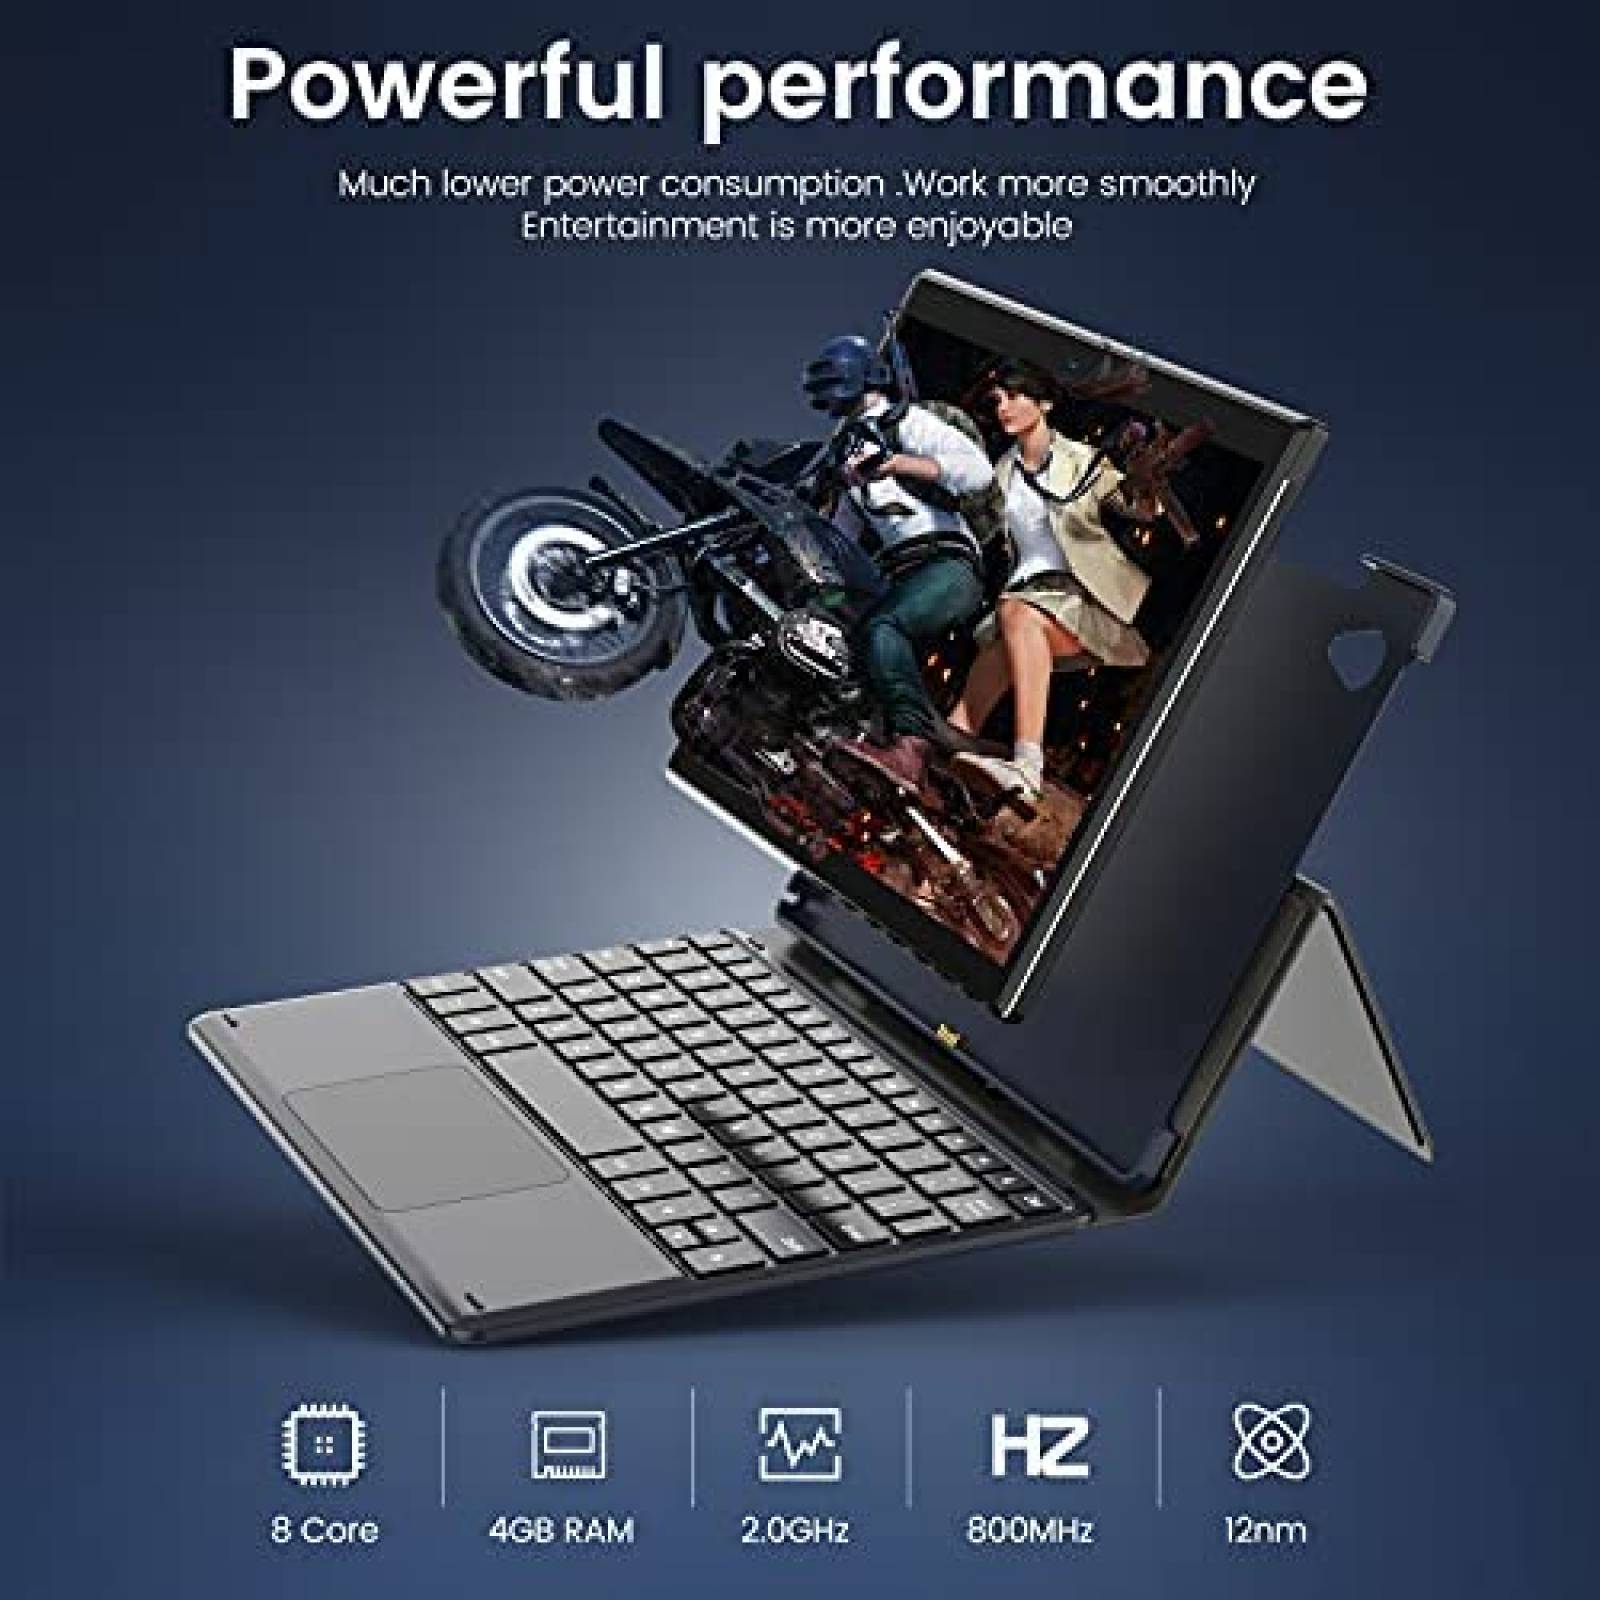 Honor Pad X8 Tablet 64gb Wi-fi 4gb Ram 10.1 Pulgadas Azul Color Azul Oscuro